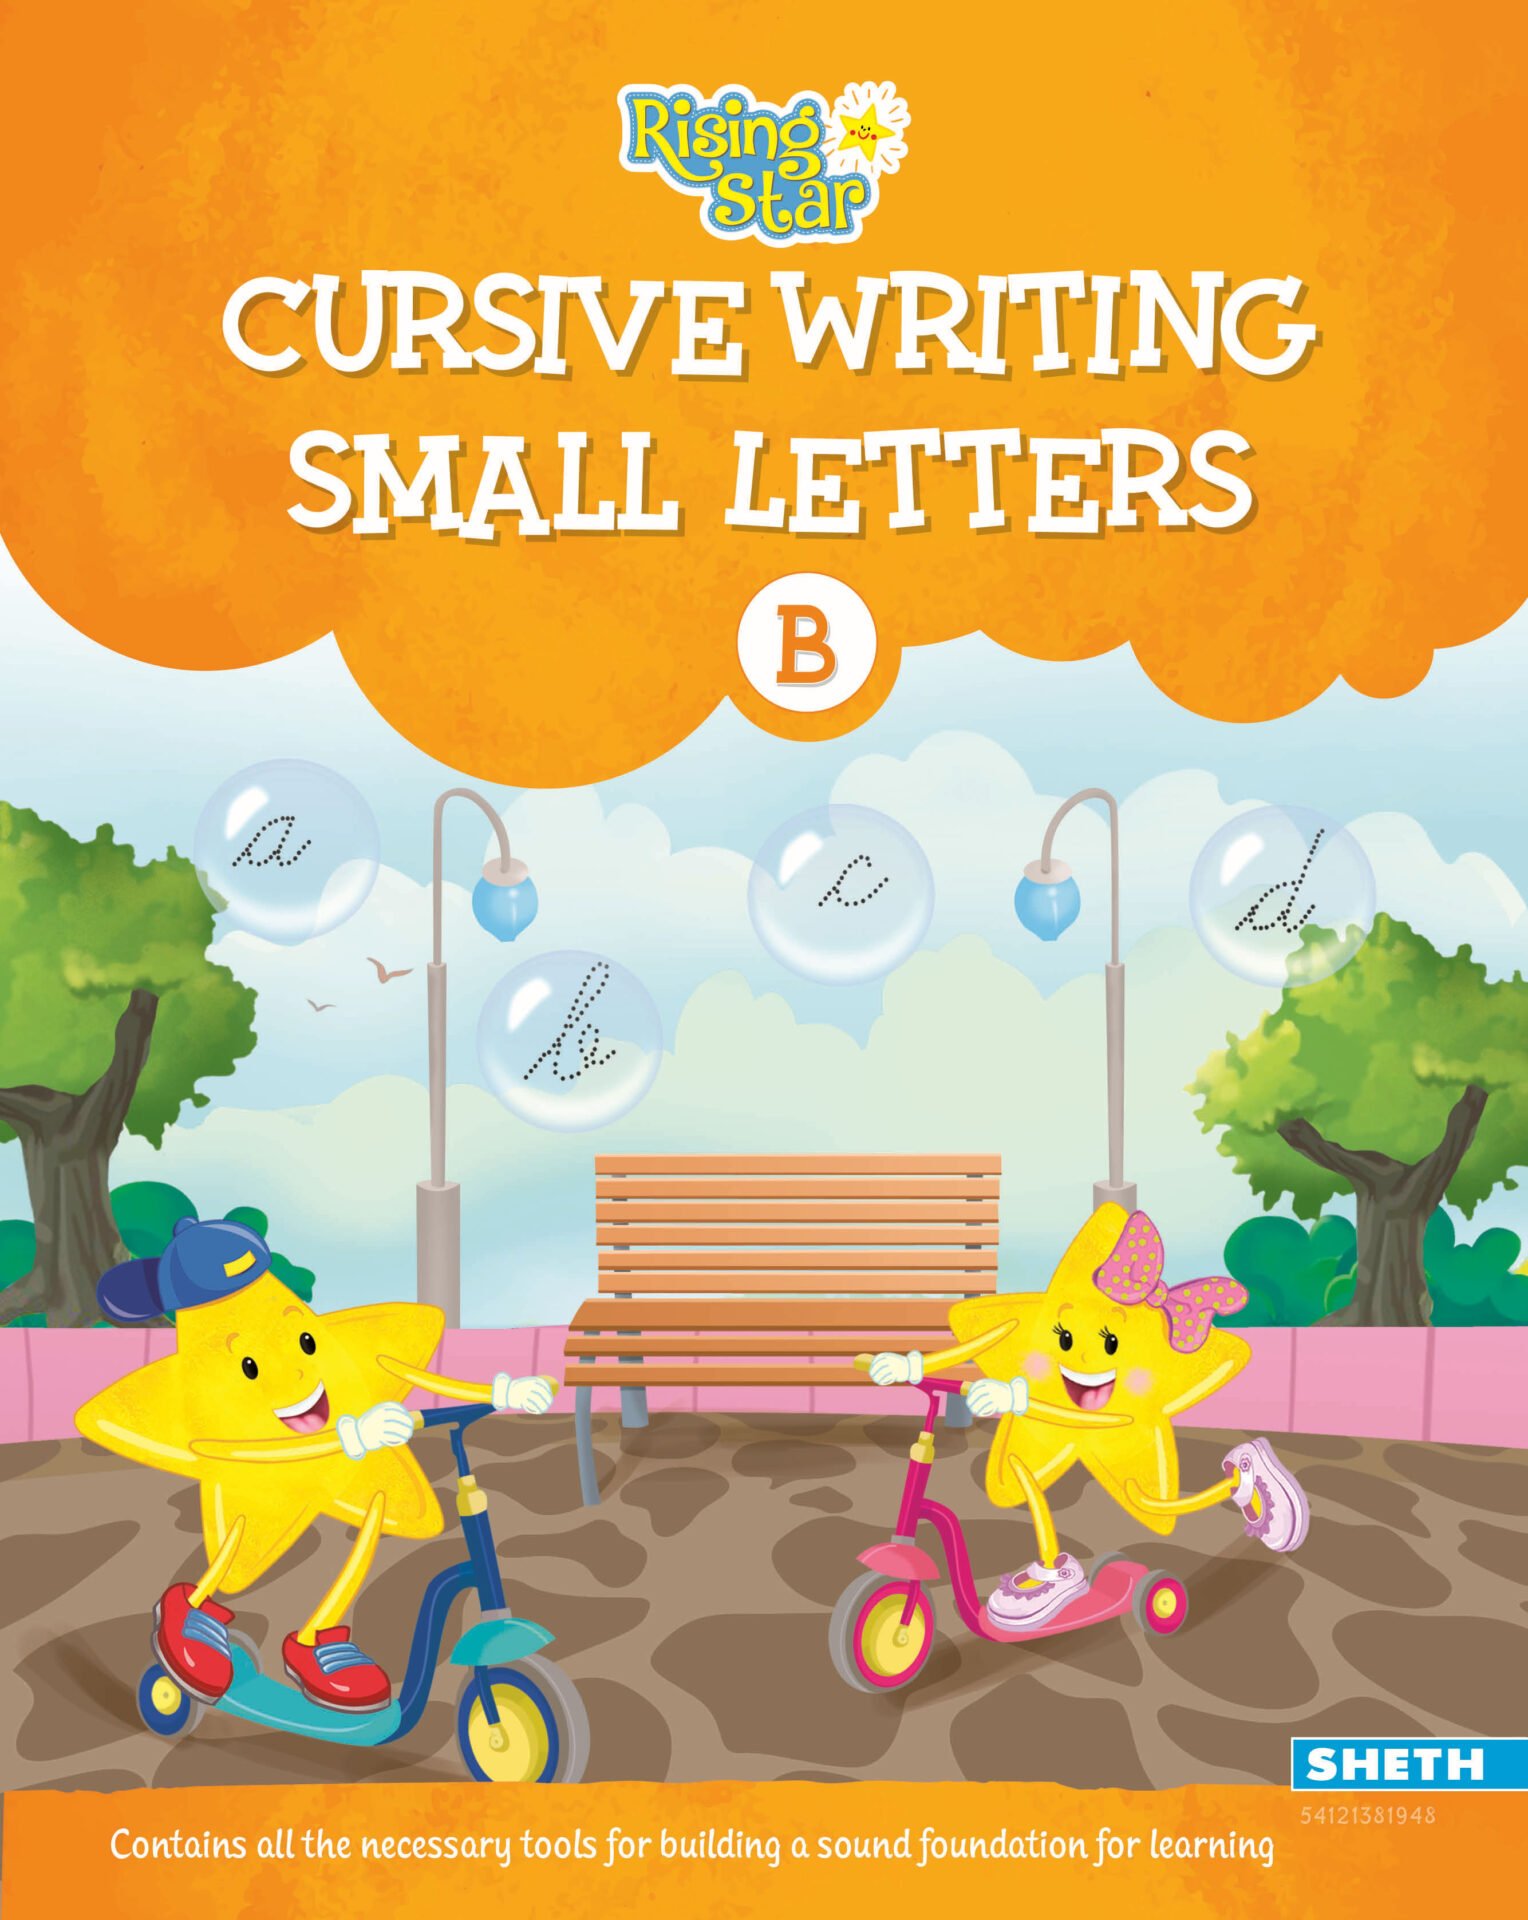 Rising Star Cursive Writing Small Letters B 01 1